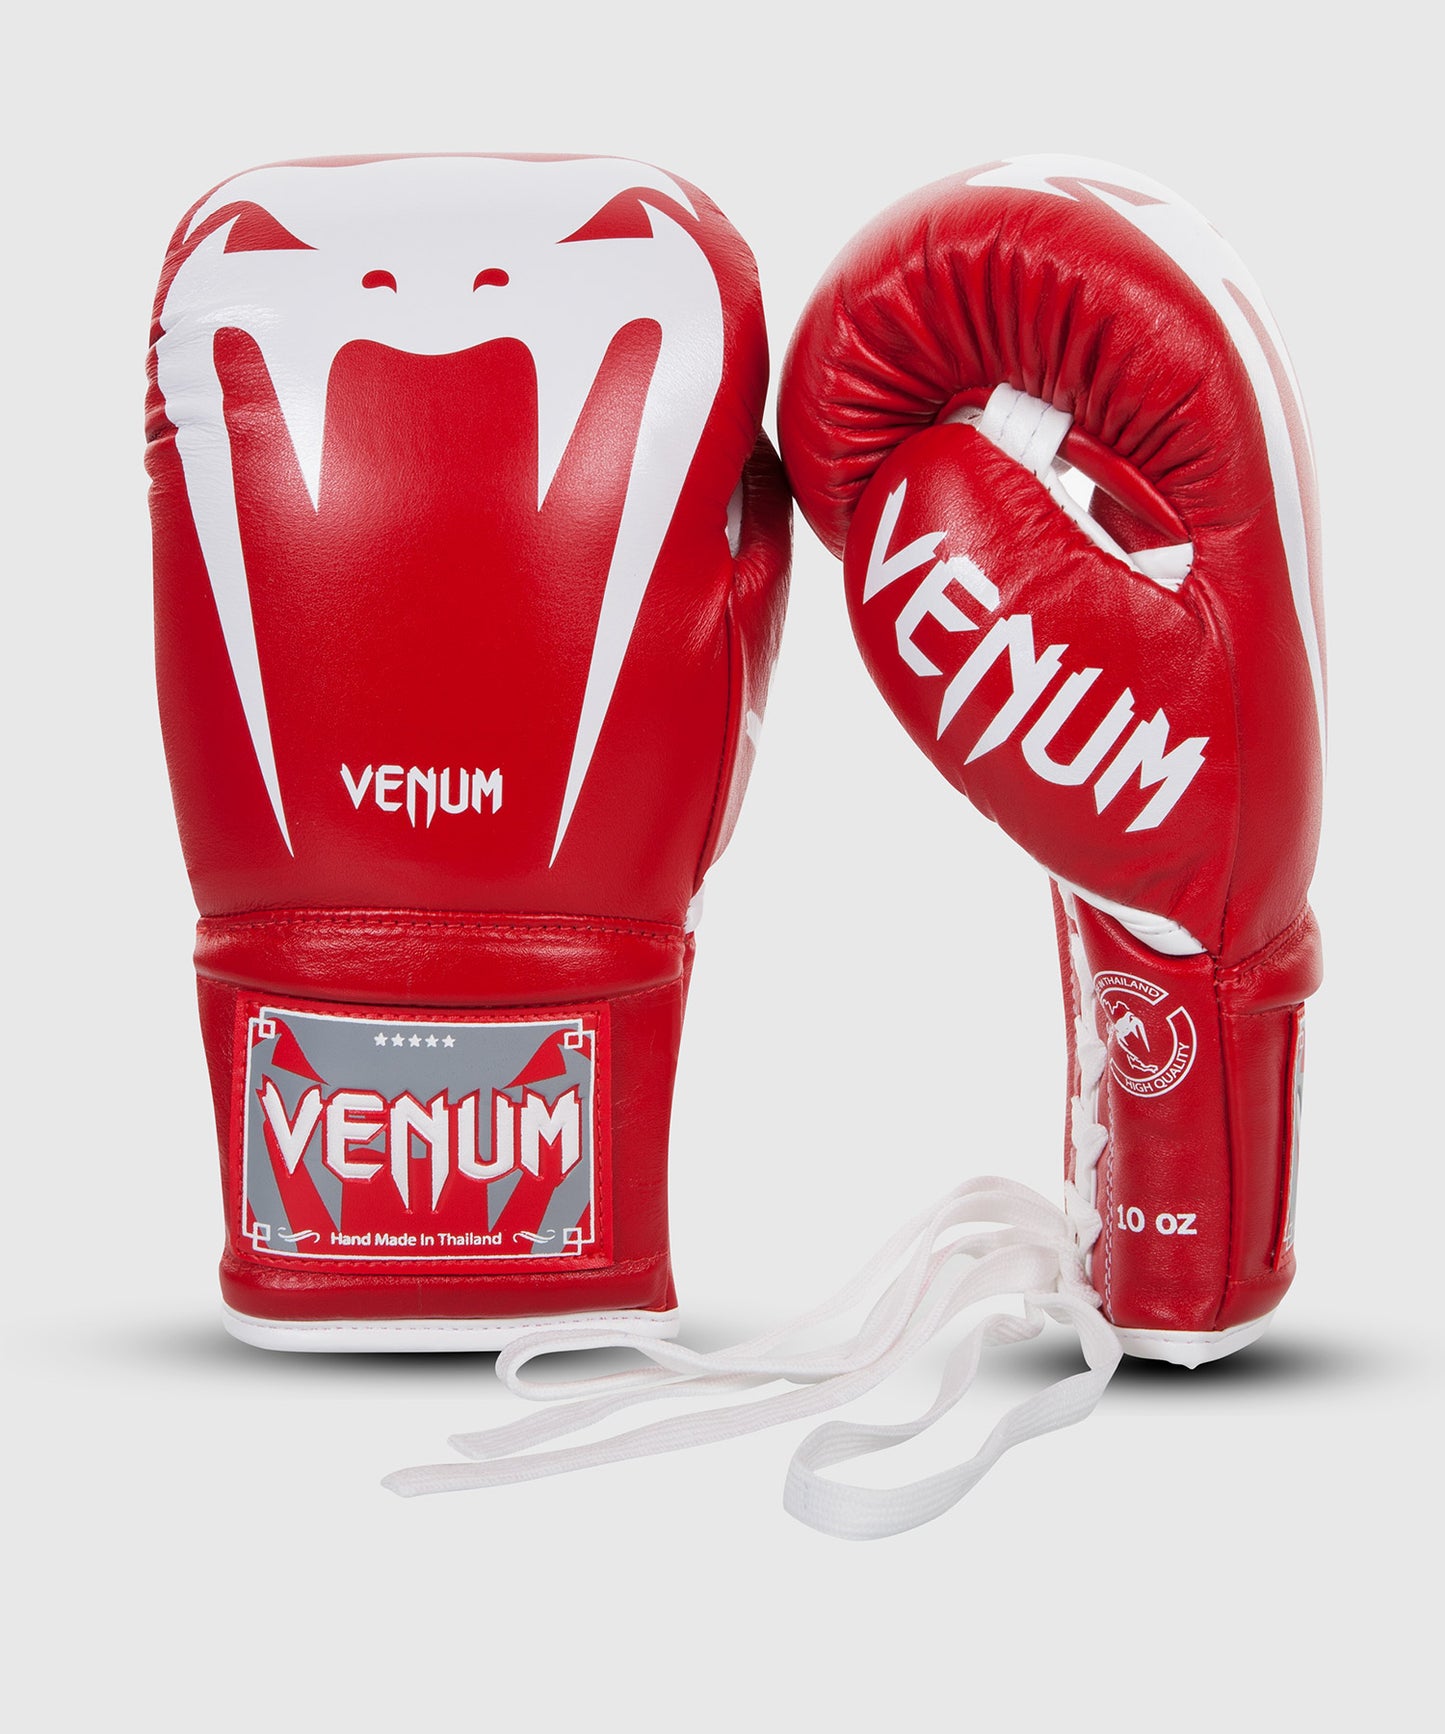 Venum Giant 3.0 Boxhandschuhe - Nappaleder - Mit Schnürung - Rot